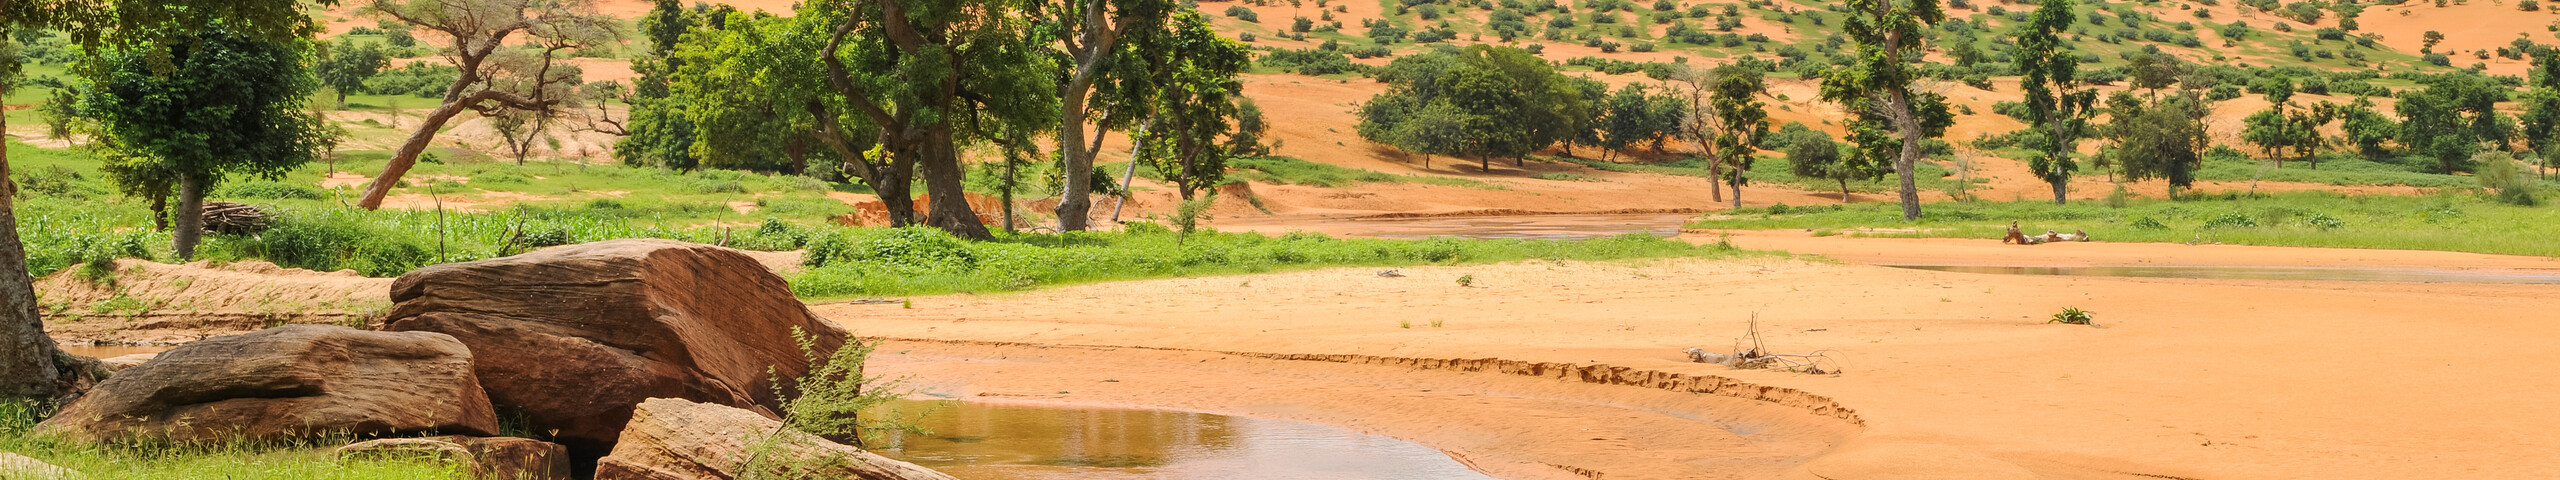 Landscape of Mali